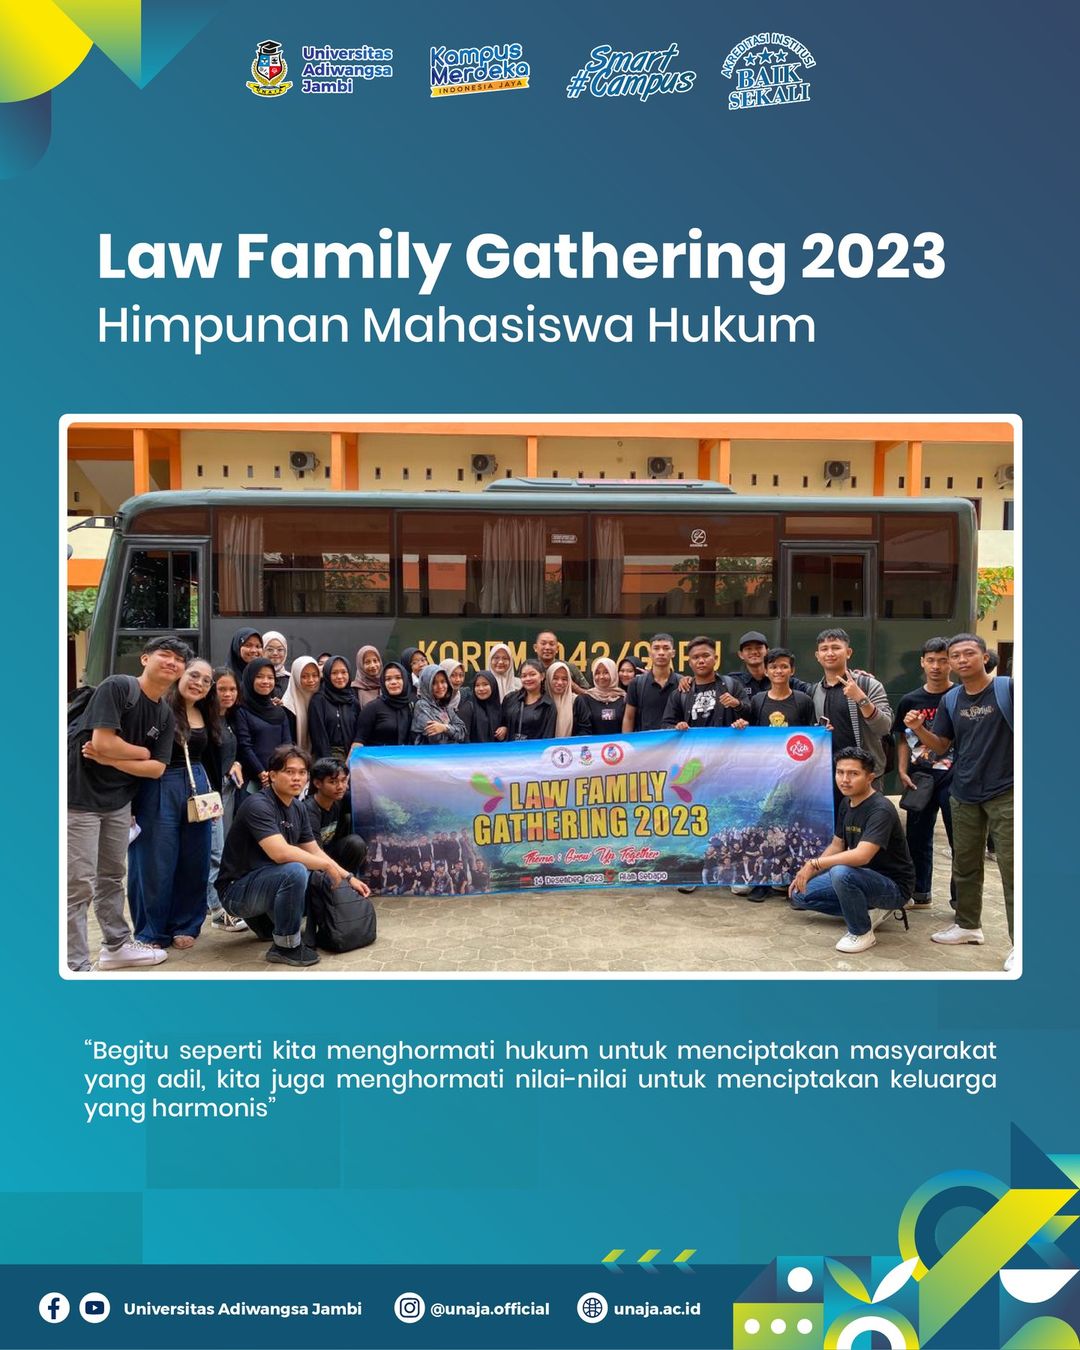 Law Family Gathering 2023 - Himpunan Mahasiswa Hukum